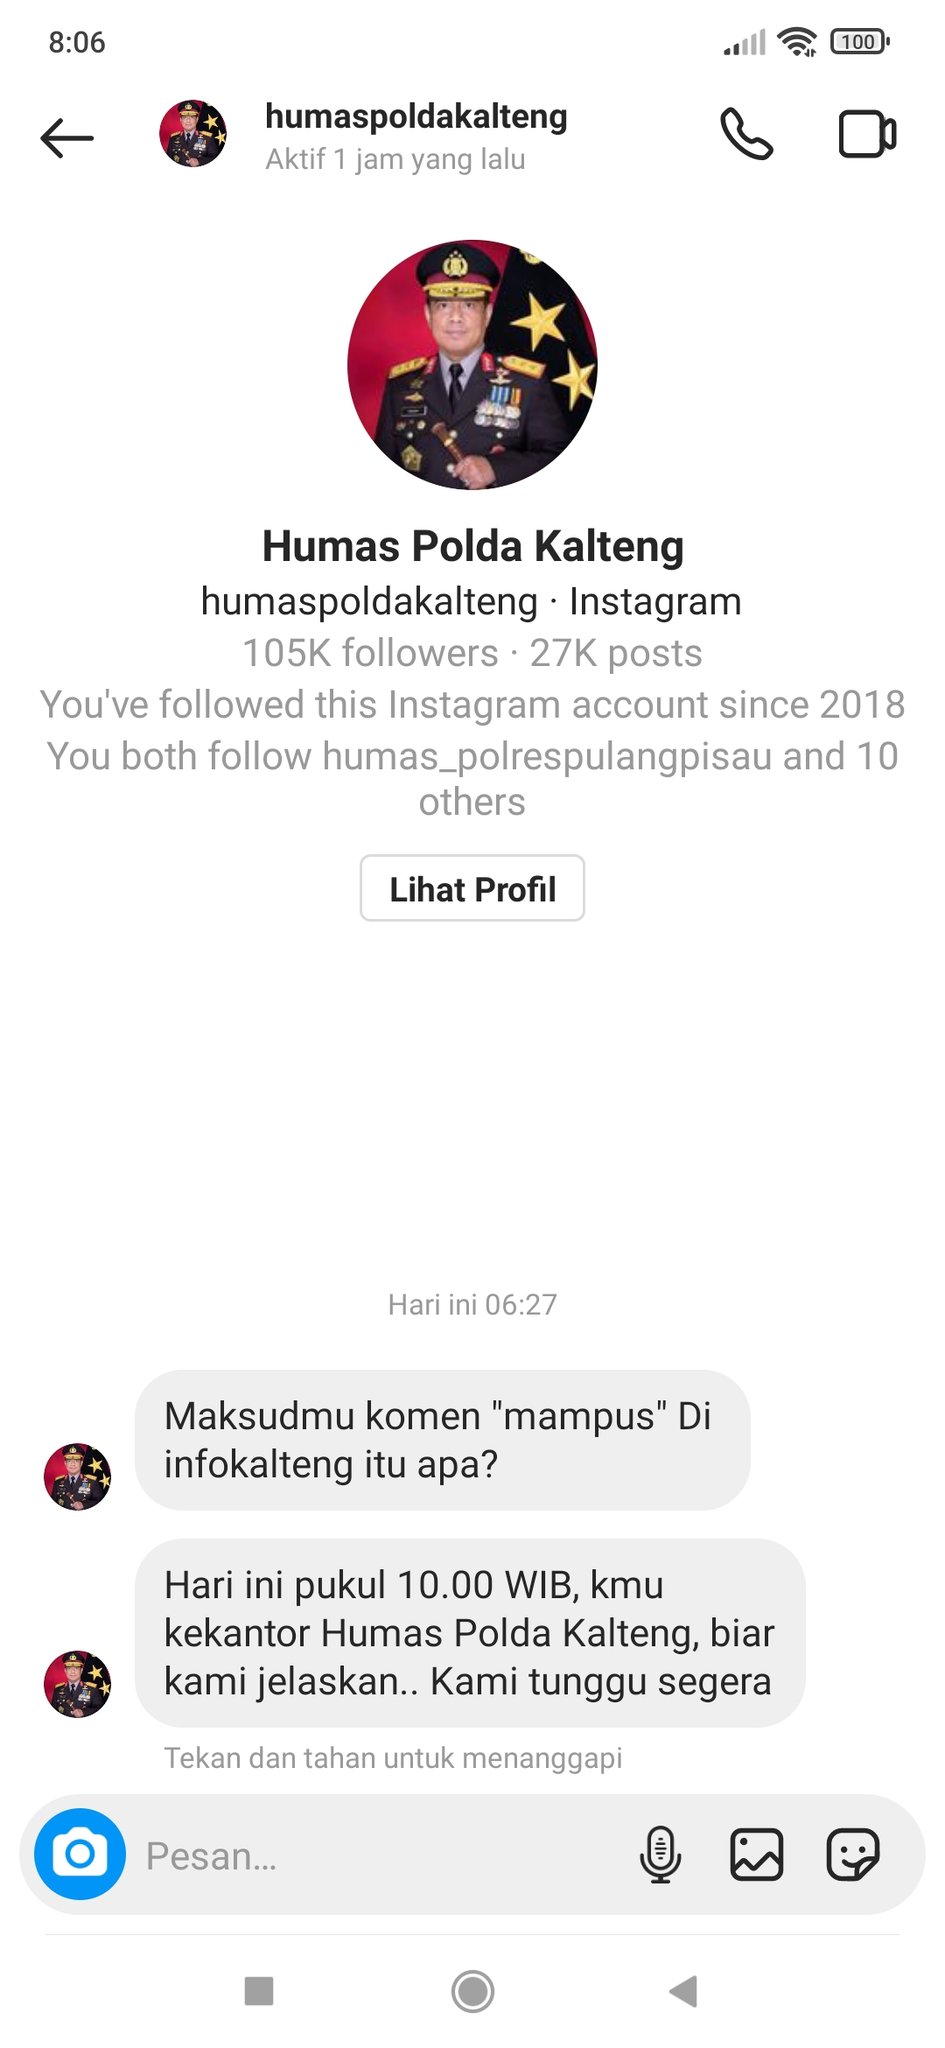 DM Instagram Humas Polda Kalteng jadi sorotan, Kabid Humas minta maaf